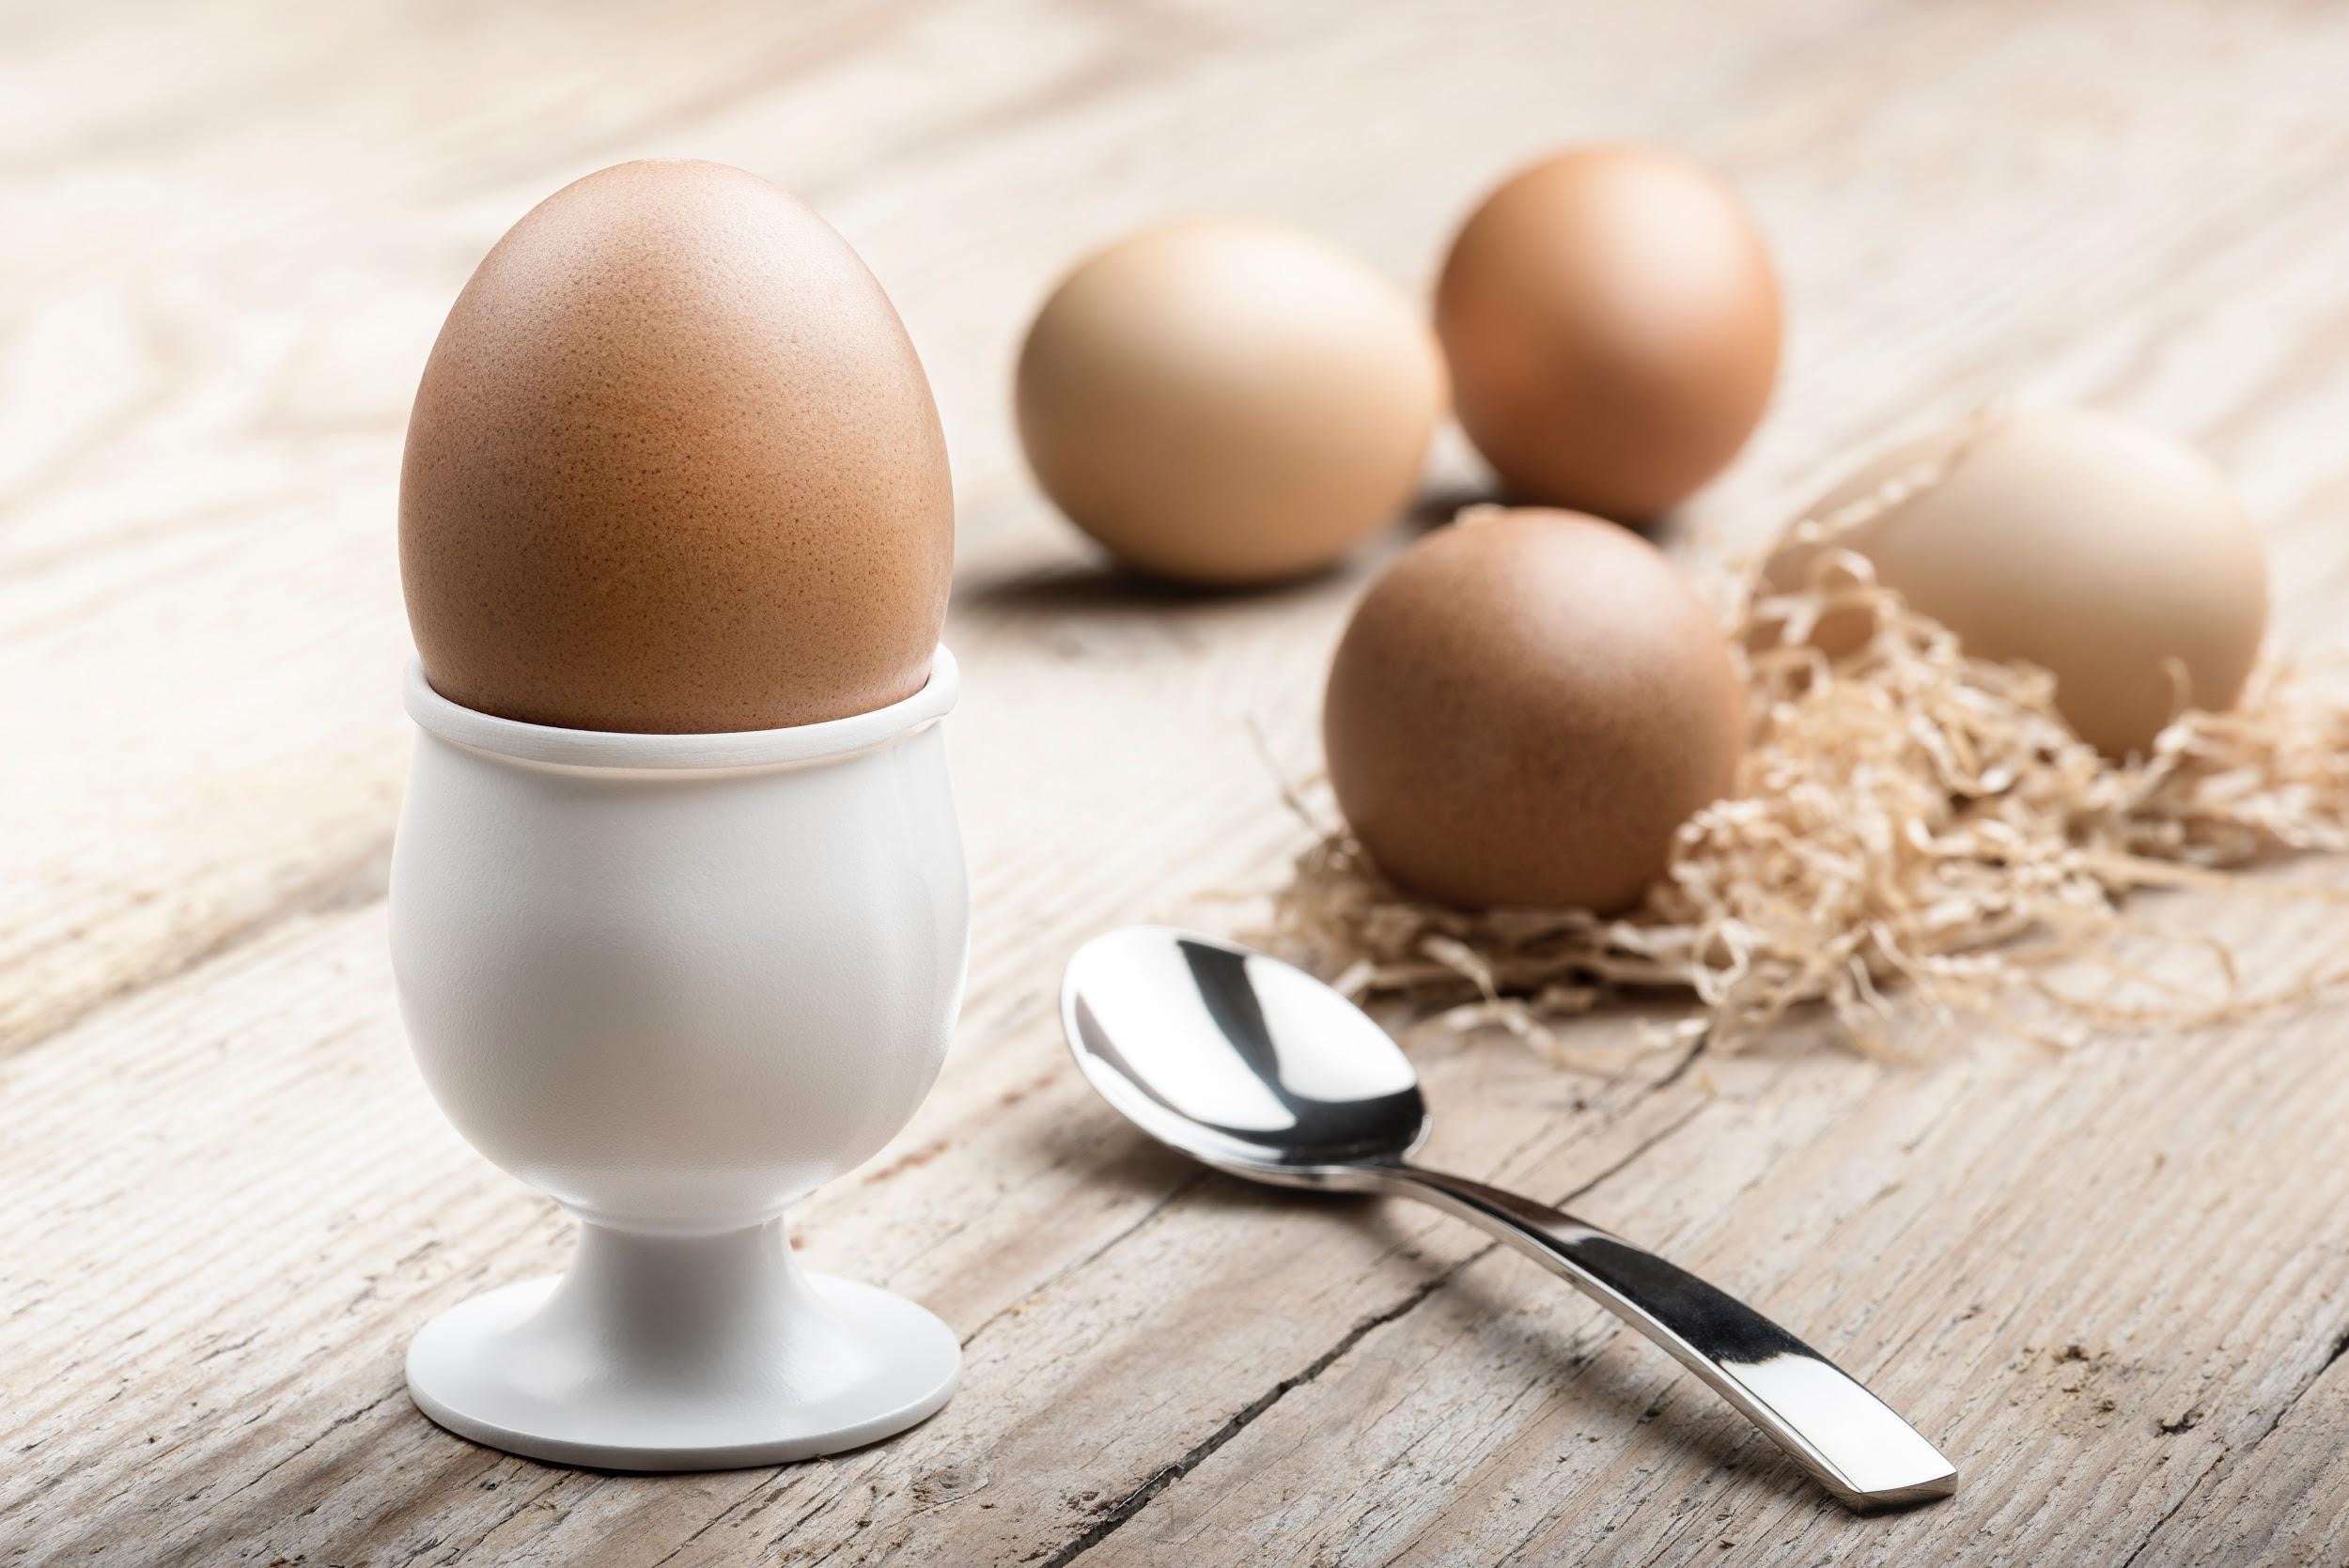 good fats for brain health - hard boiled eggs